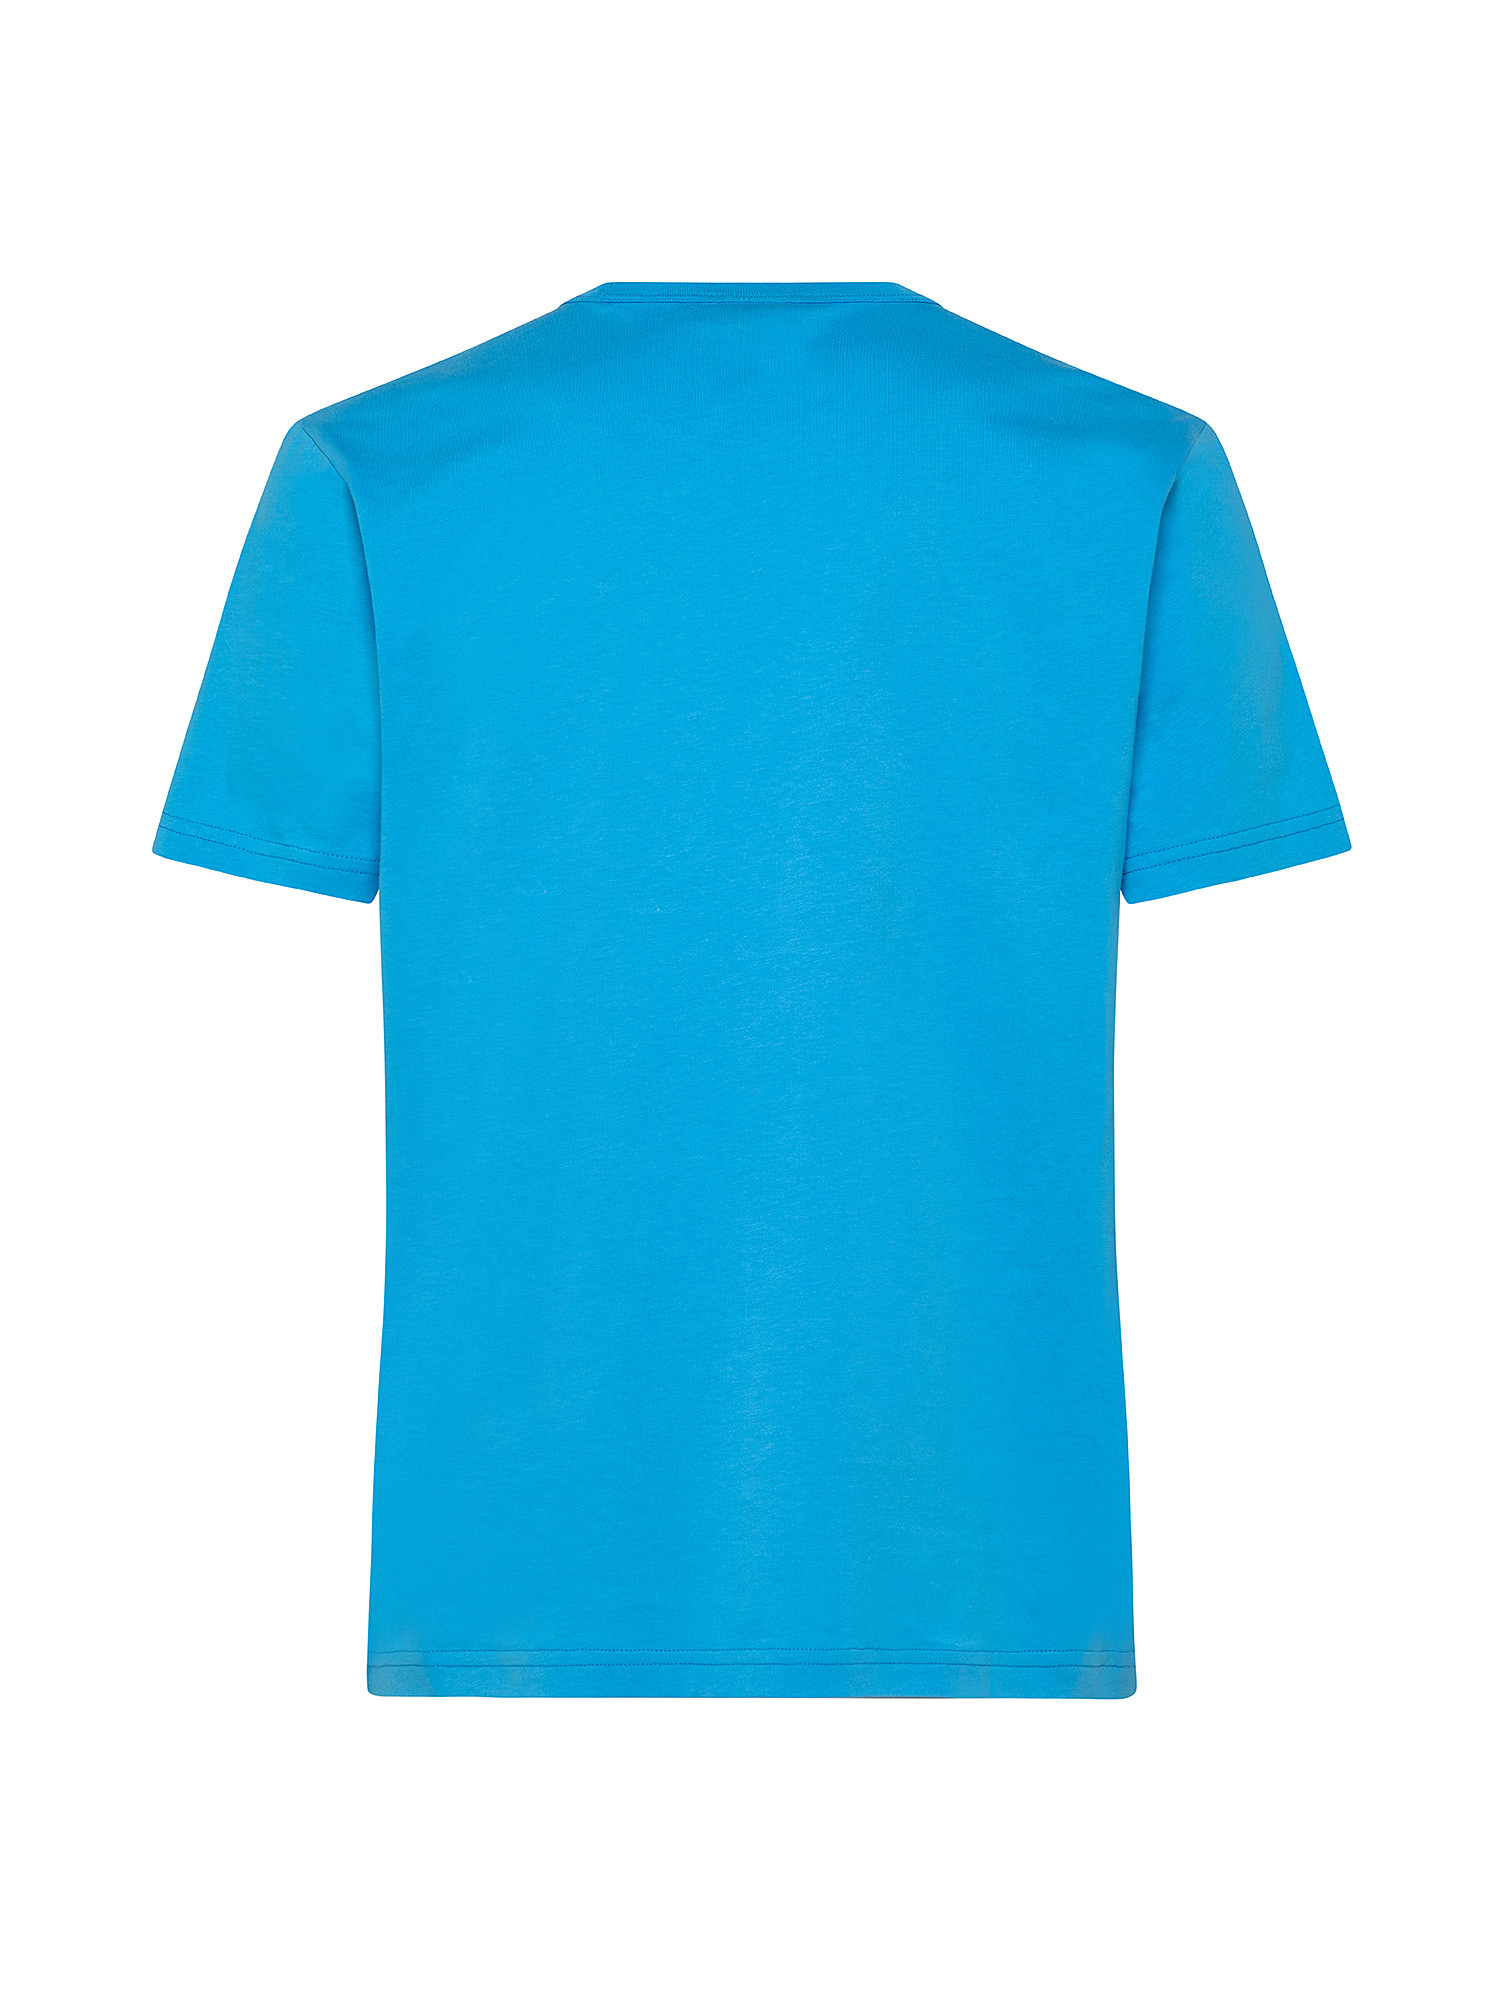 T-shirt manica corta, Azzurro, large